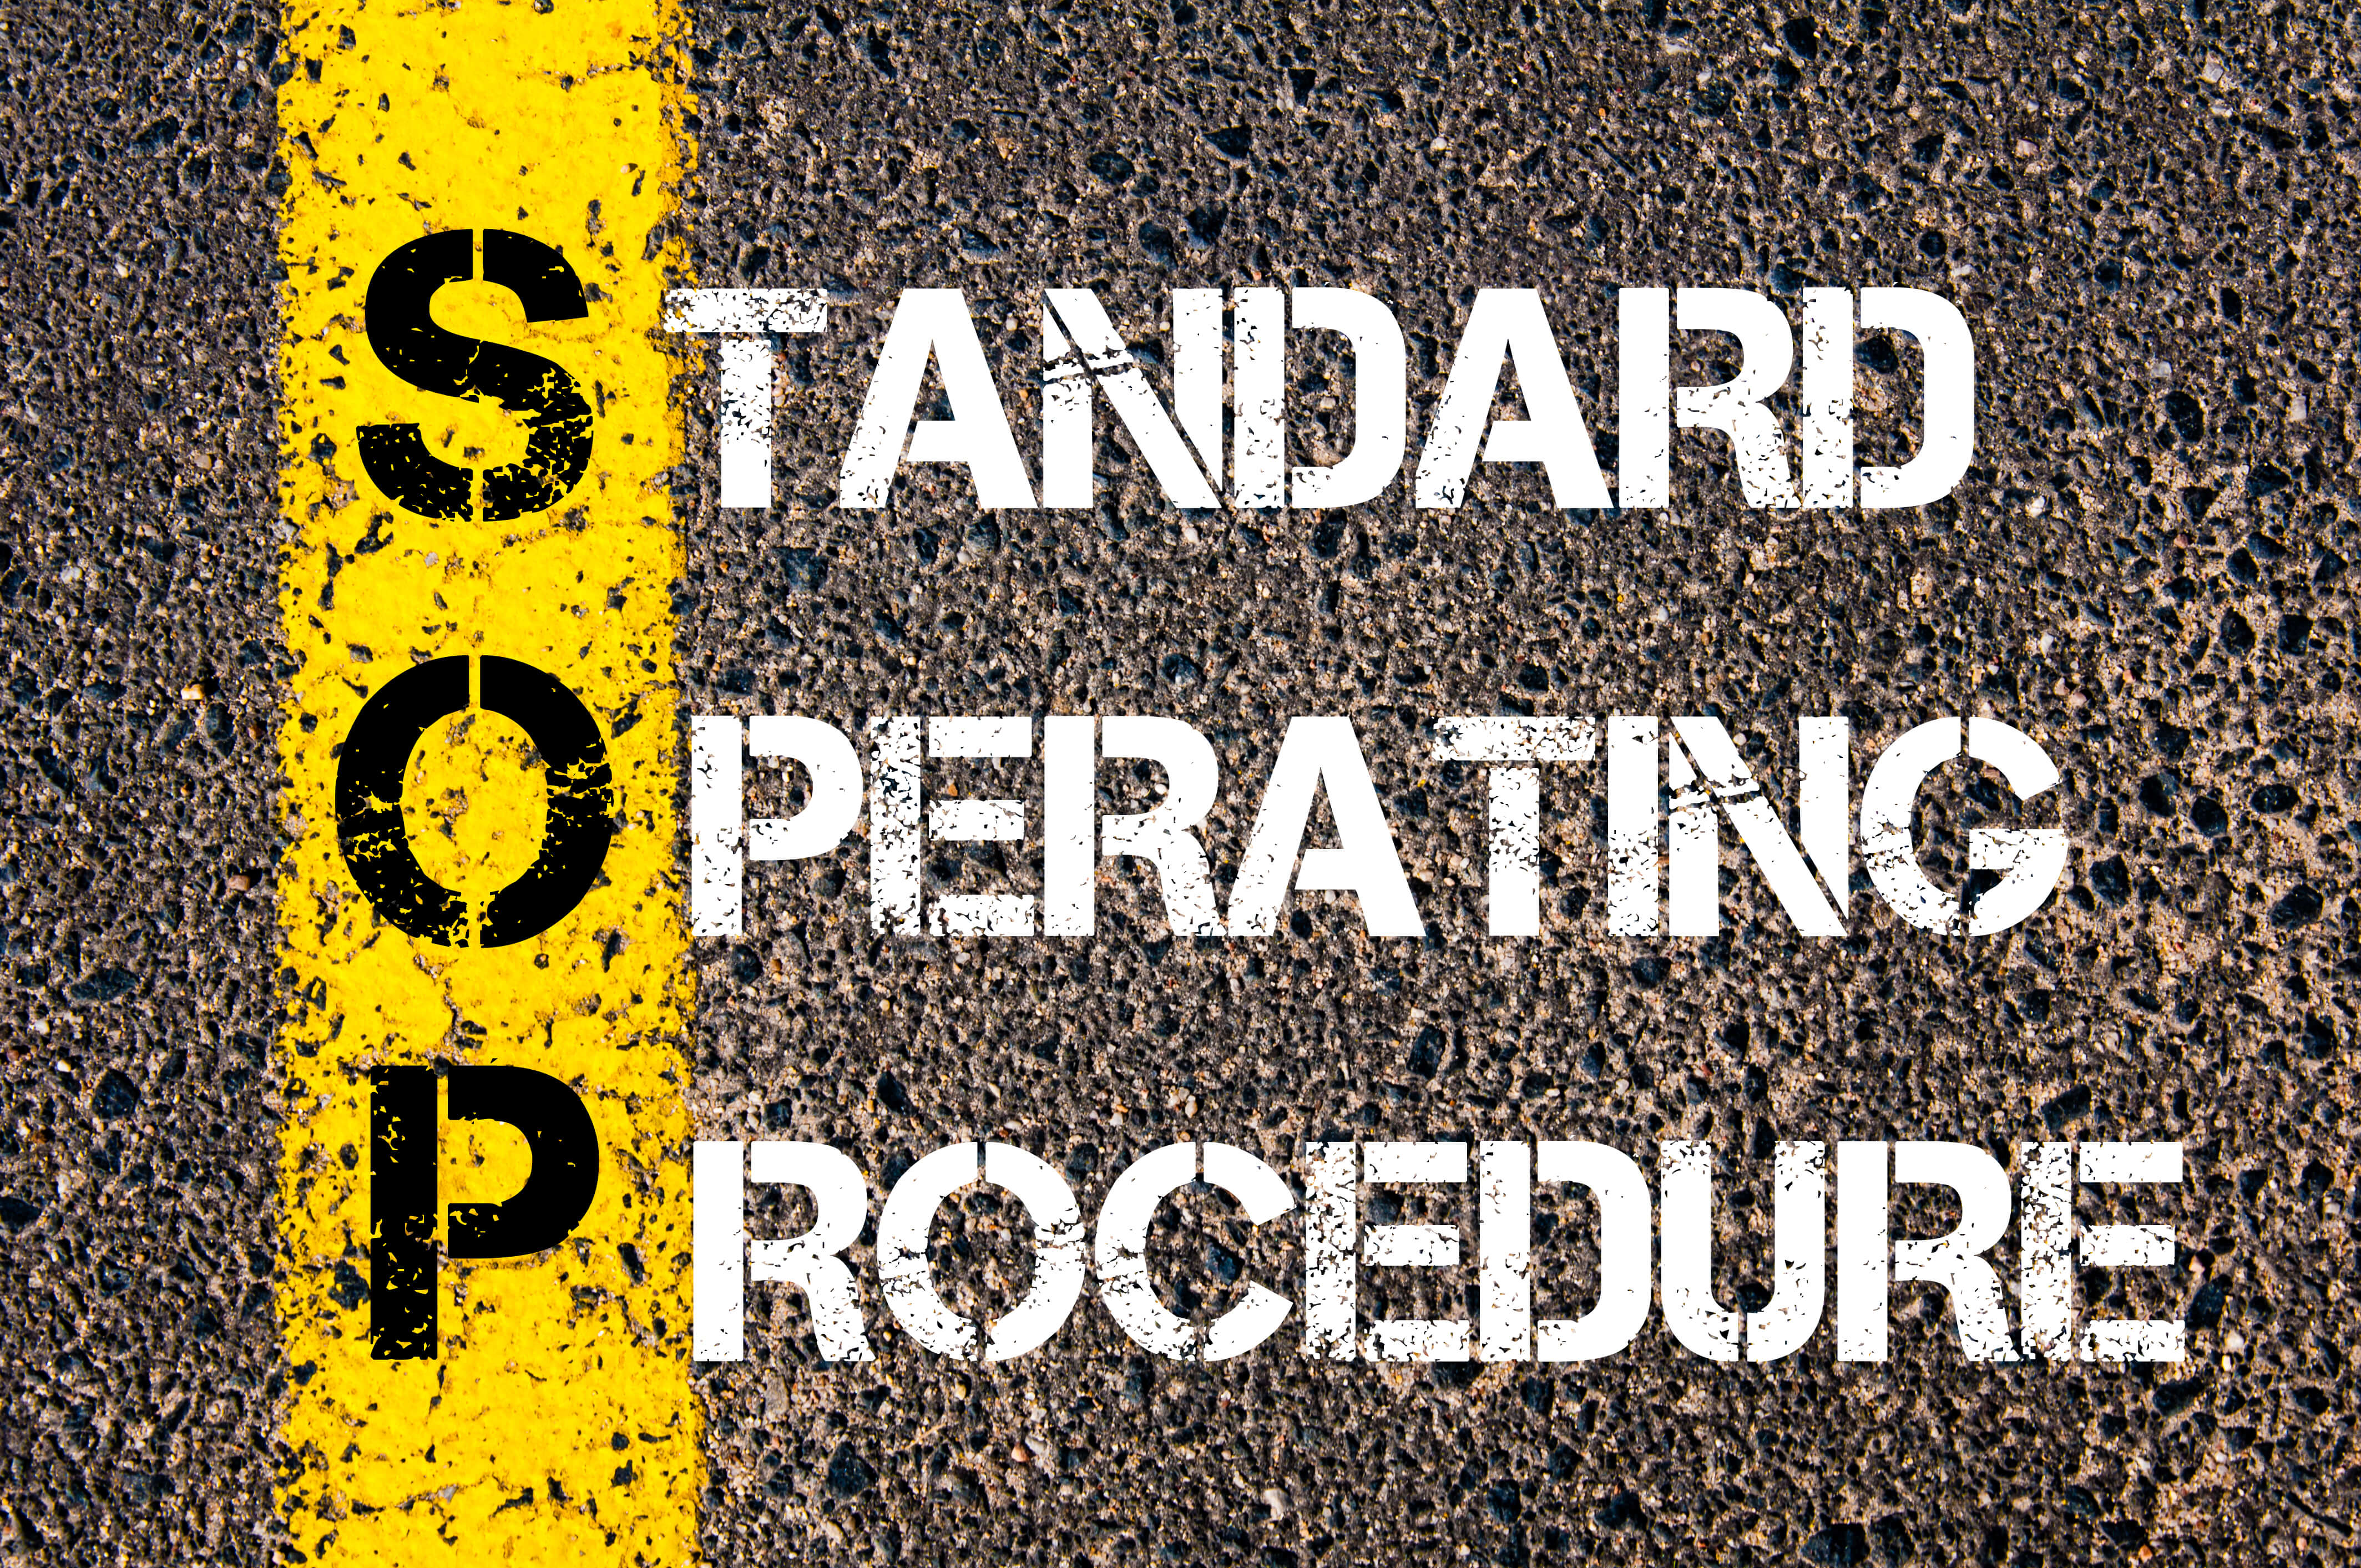 Project Standard Operating Procedures